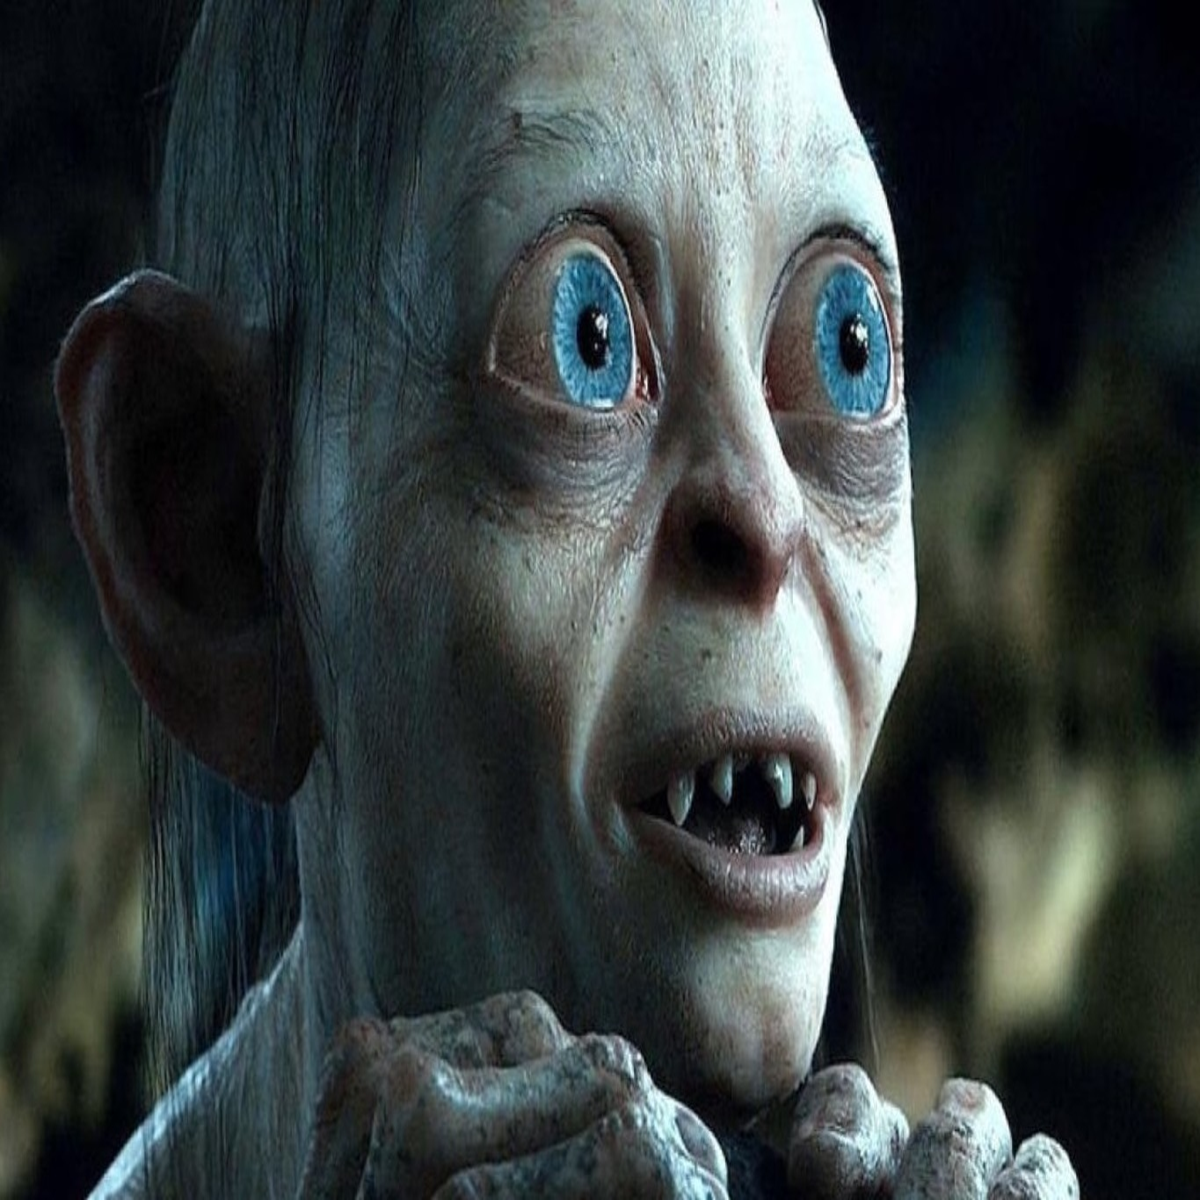 Hobbit's Andy Serkis talks Gollum: video